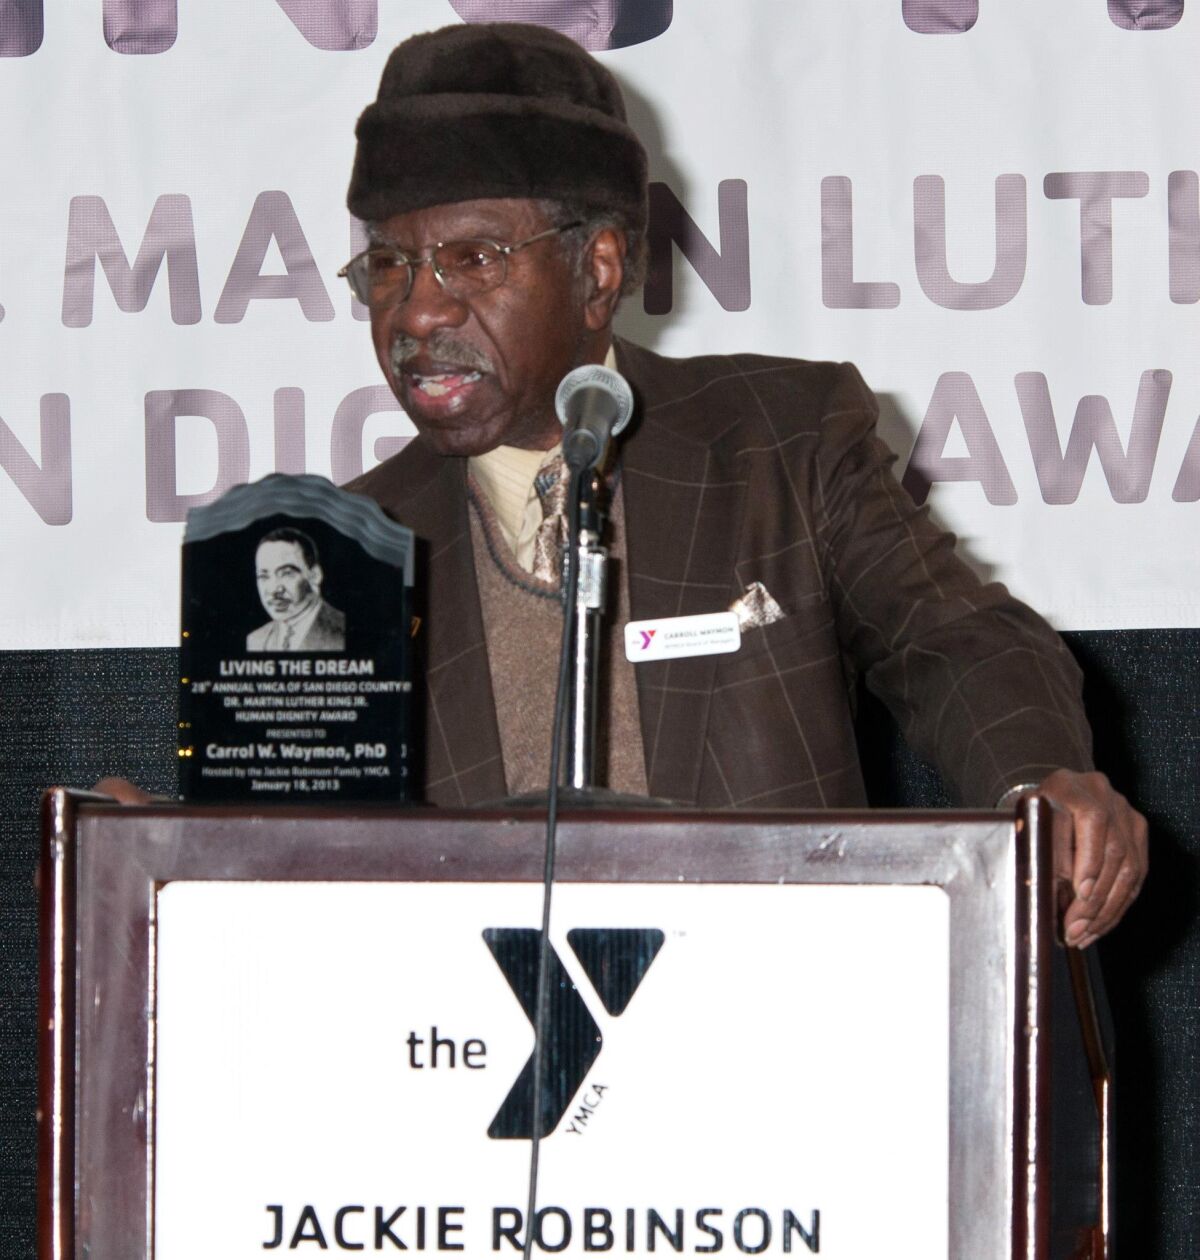 Carrol Waymon, accepting the Human Dignity Award from San Diego's Jackie Robinson YMCA in 2013.